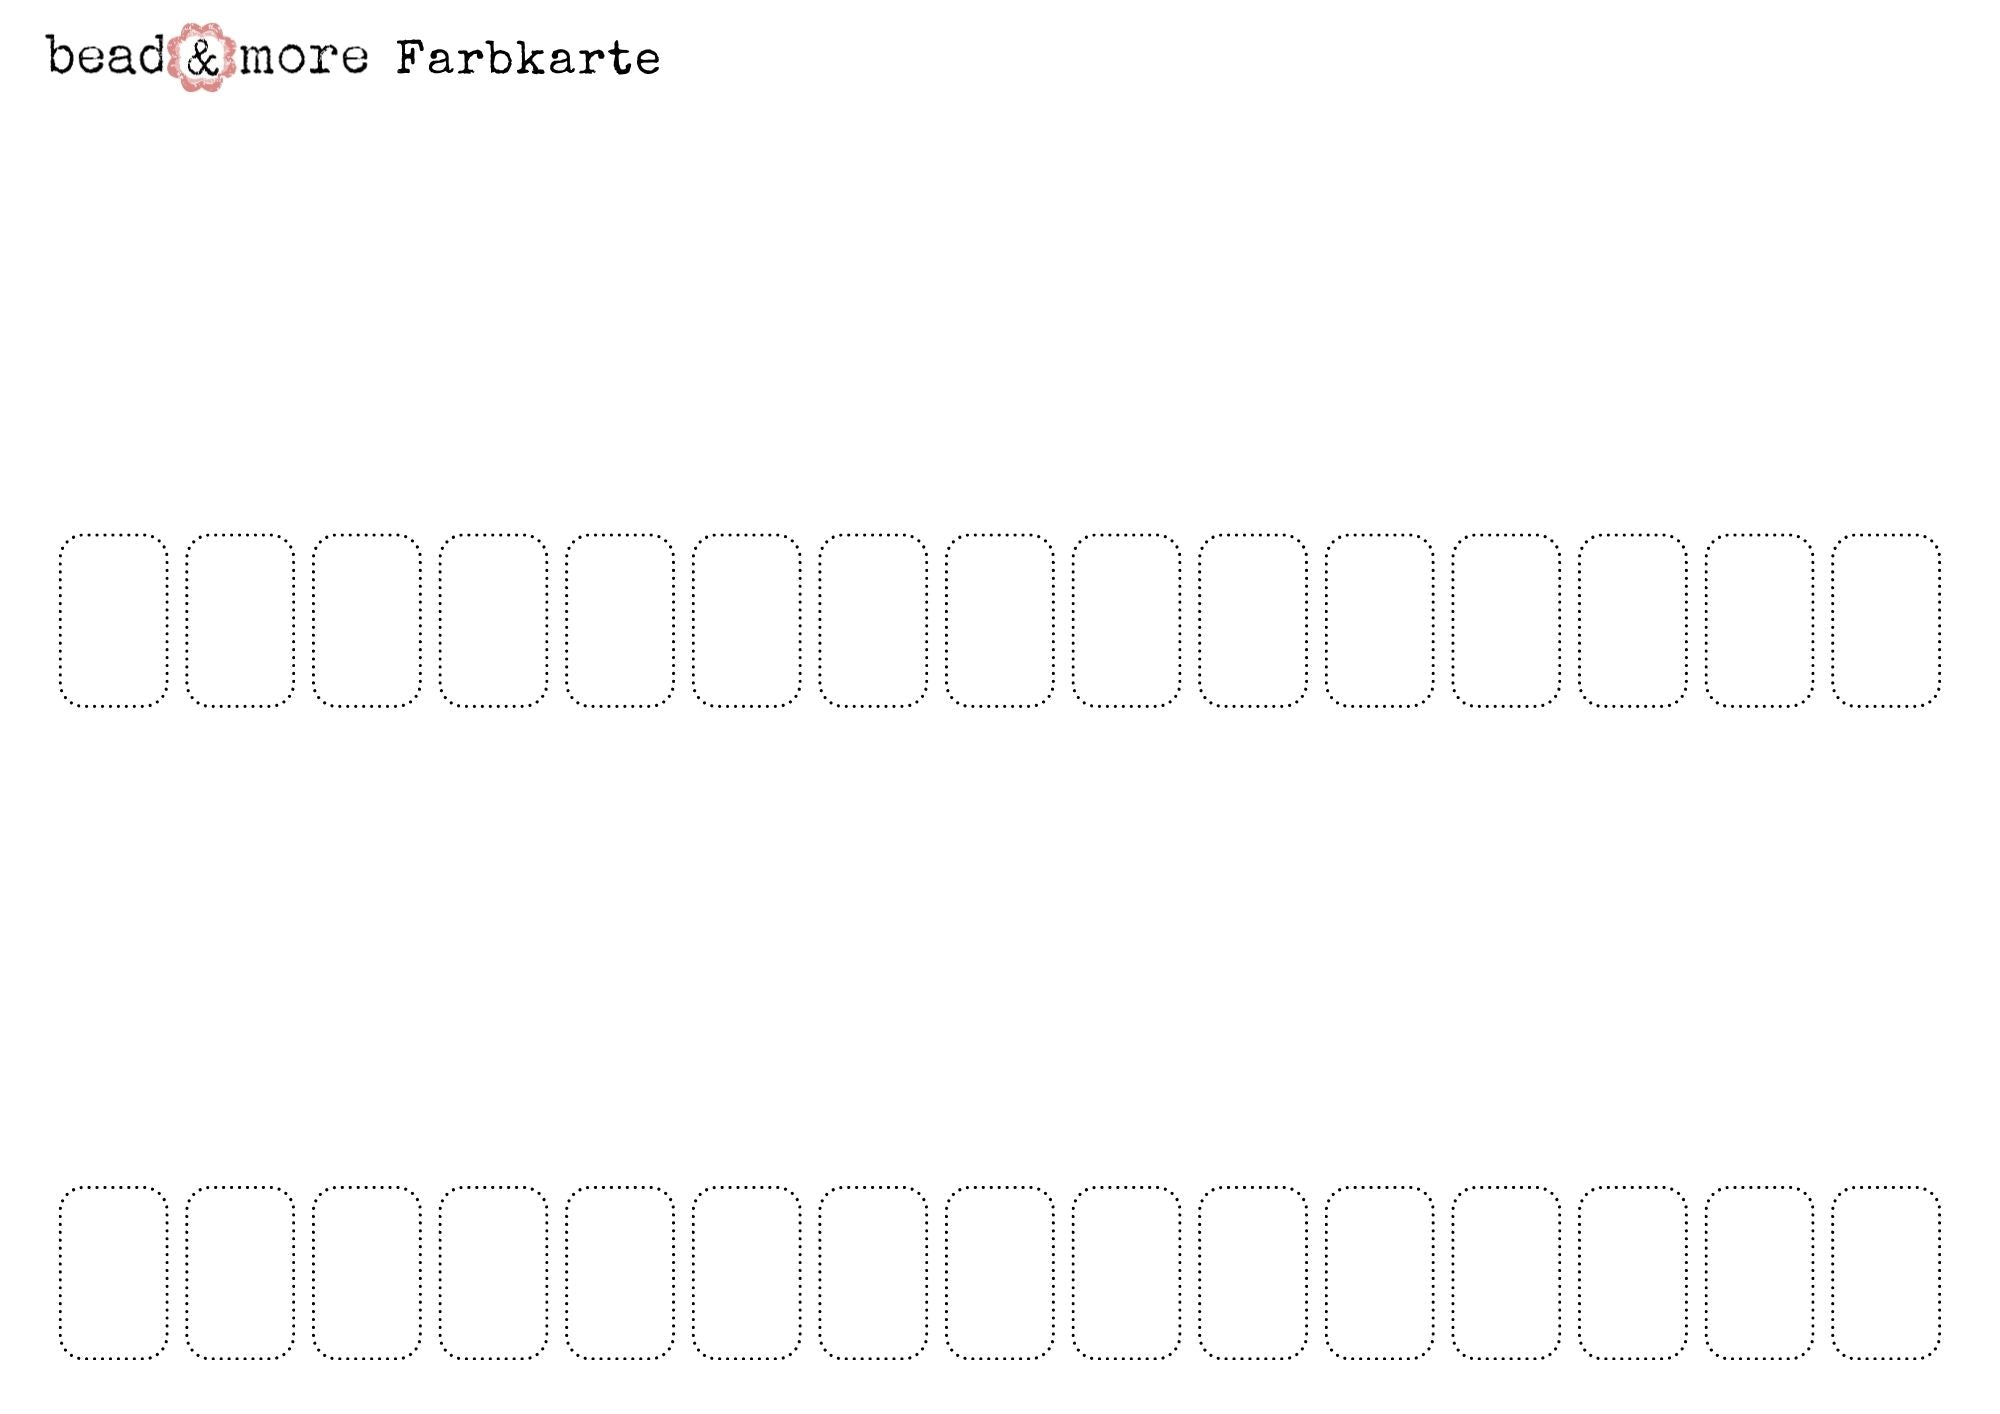 Farbkarte leer - als PDF